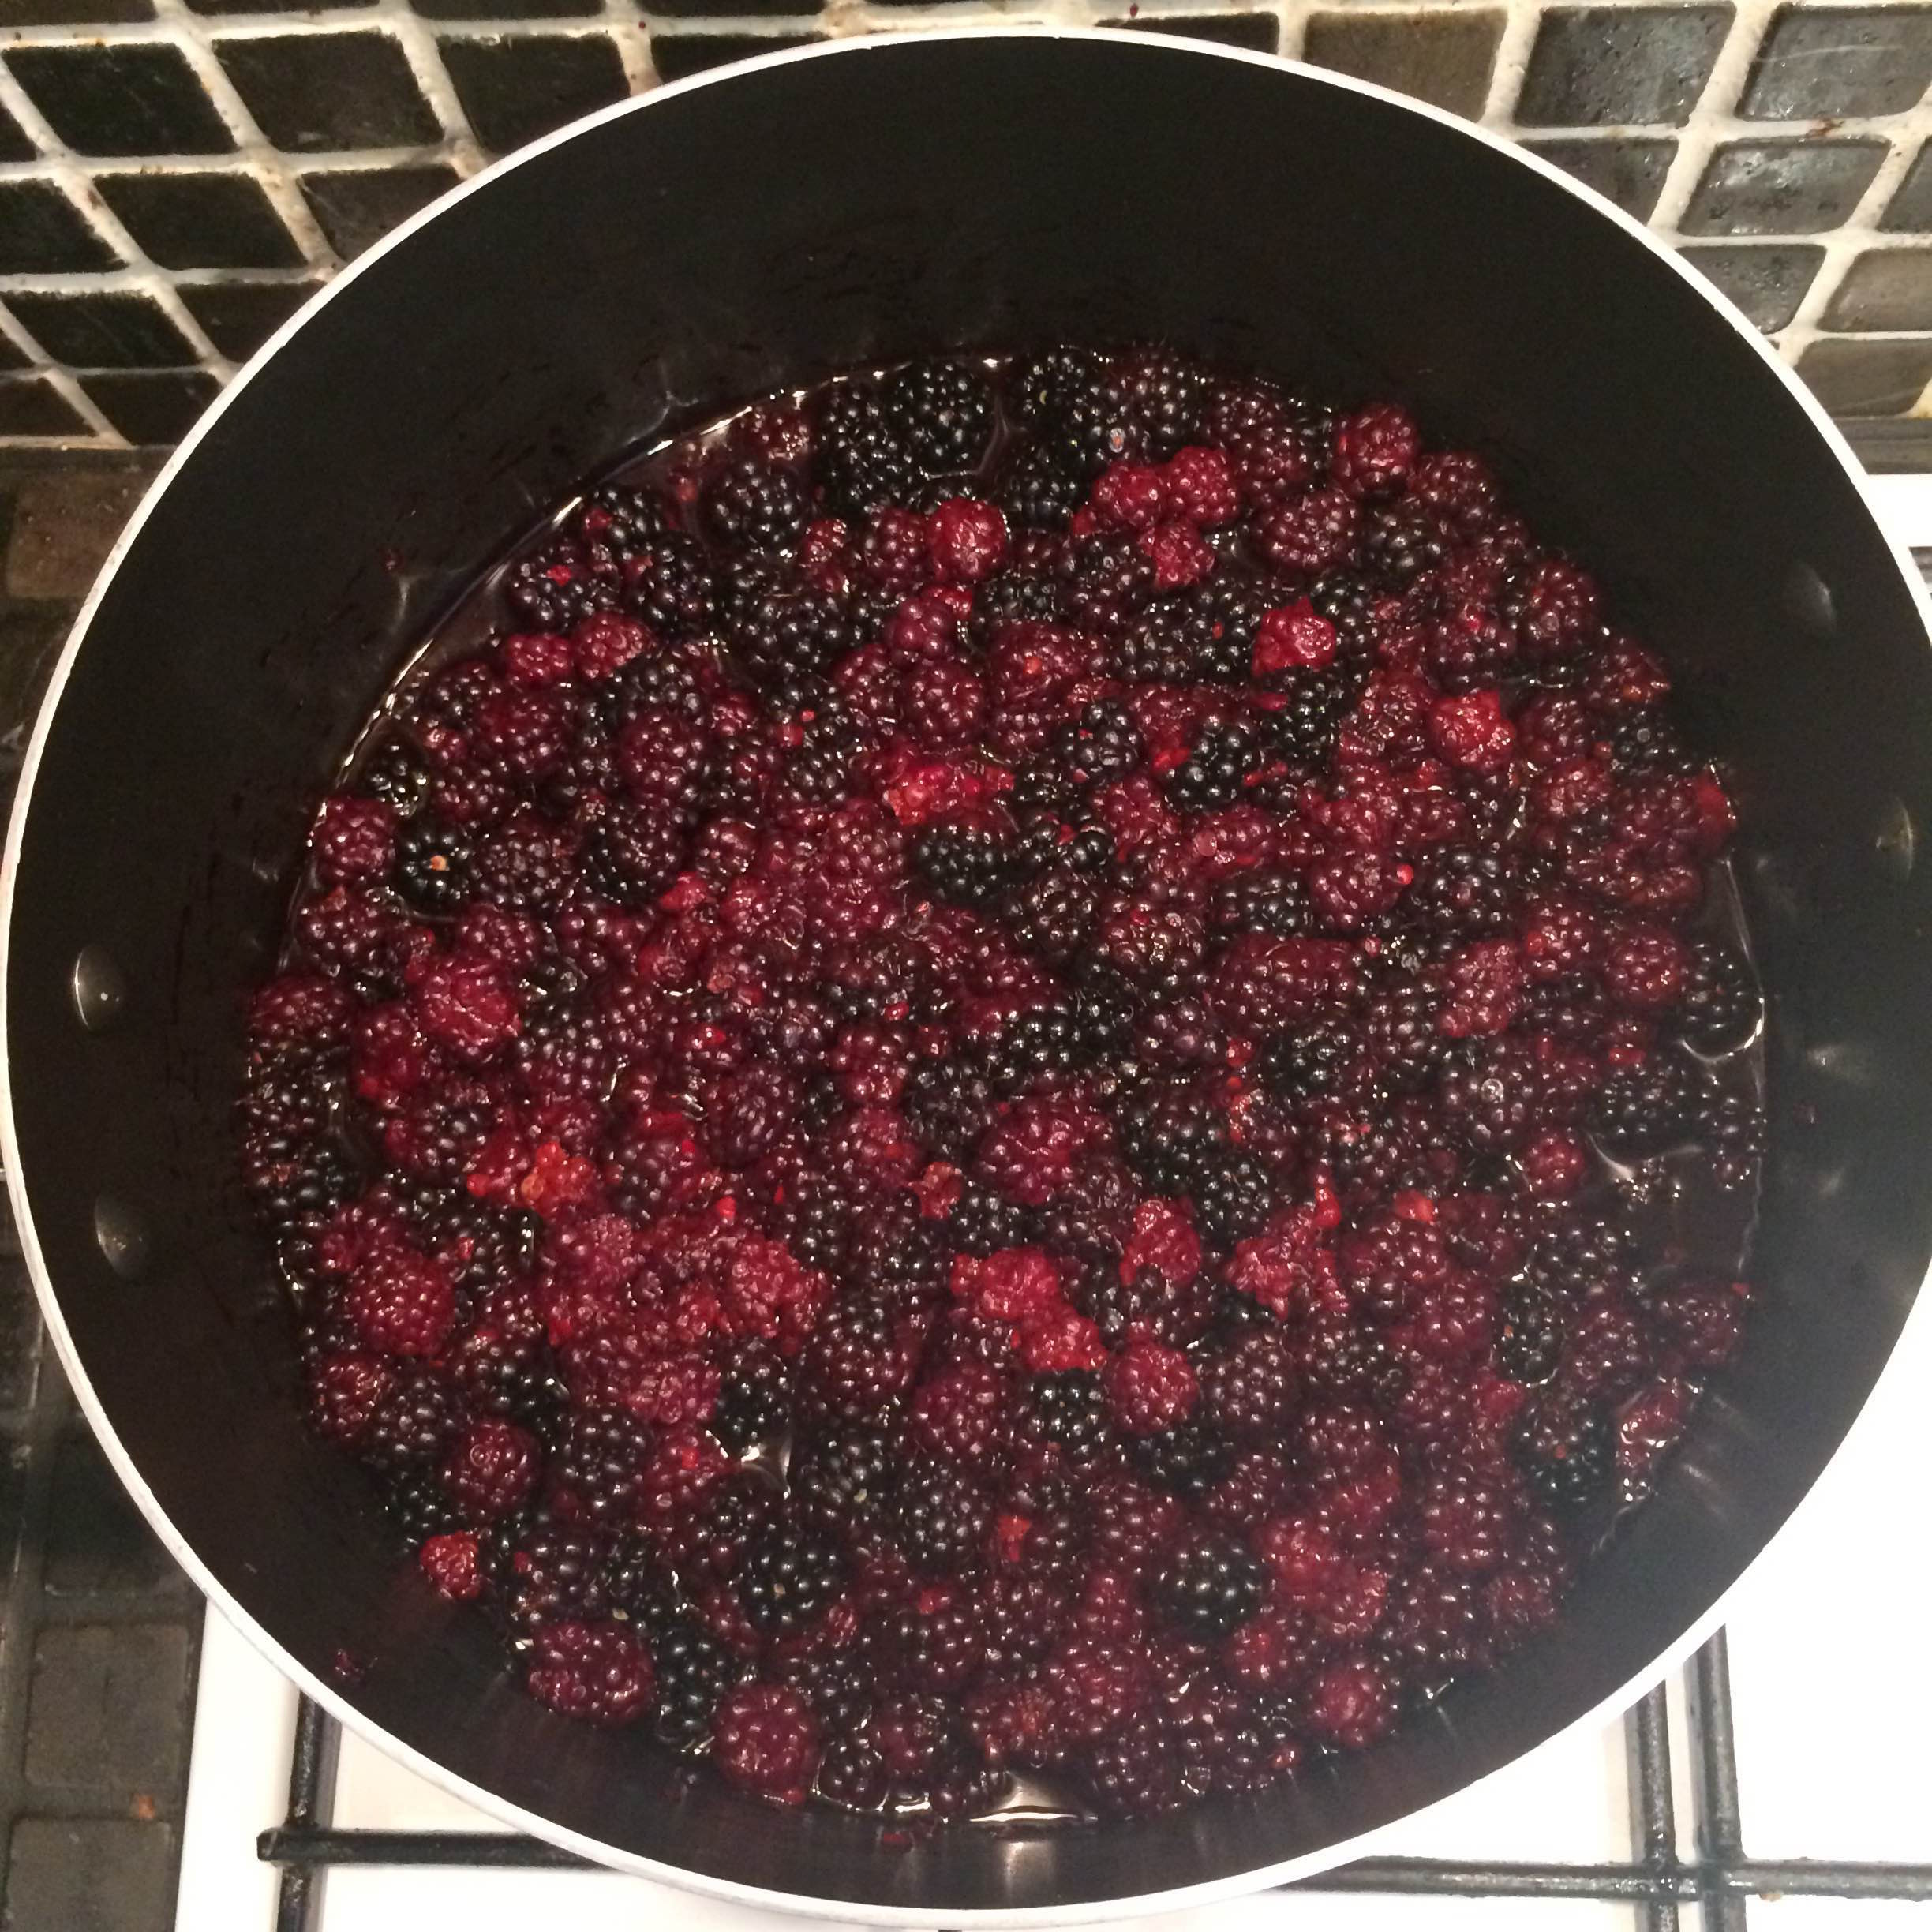 Boiling berries